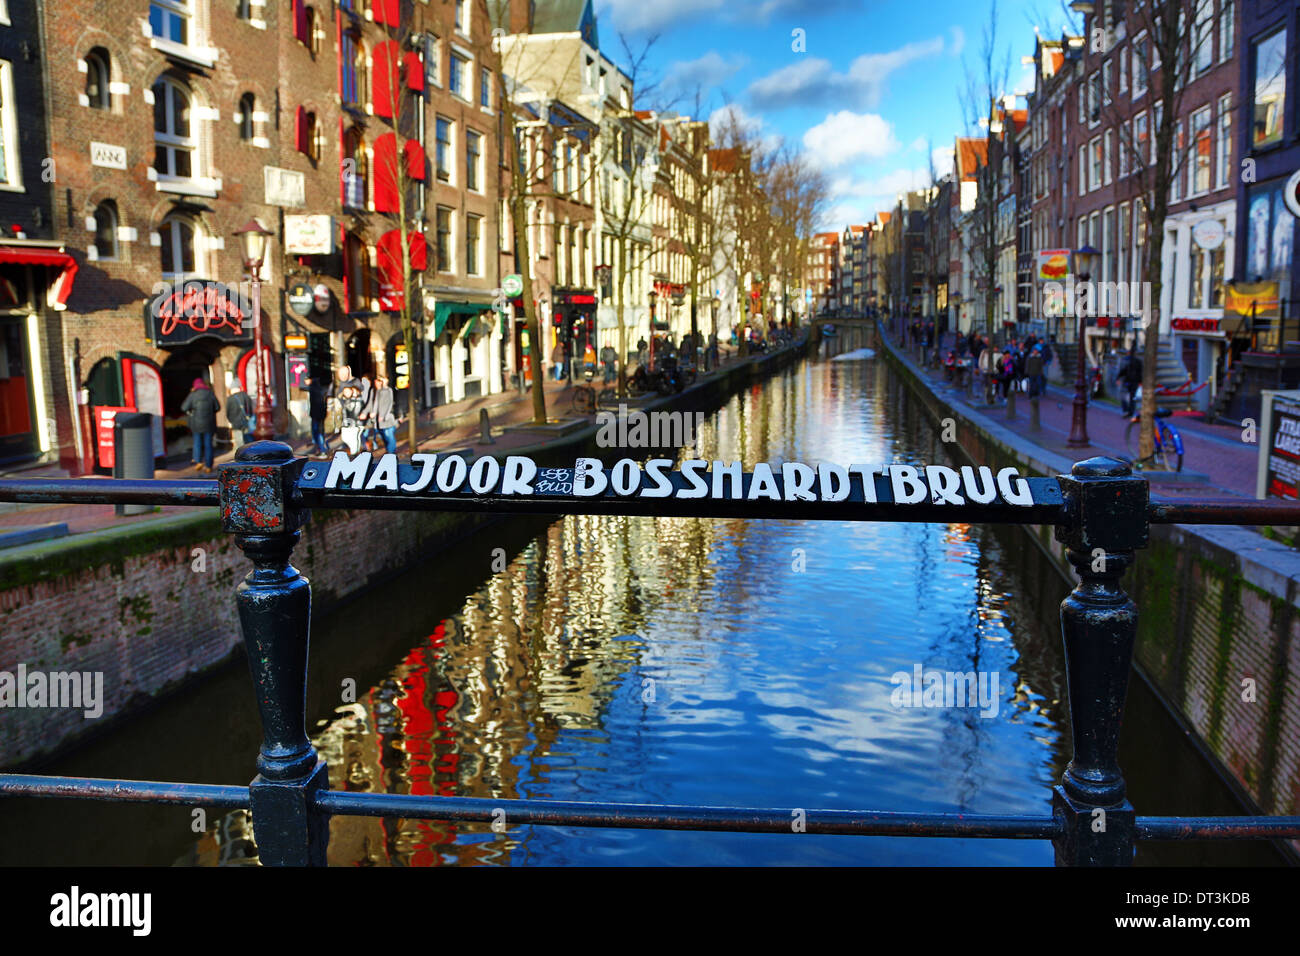 Majoor Bosshardtbrug ponte sul canale in Oudezijds Achterburgwal in Amsterdam, Olanda Foto Stock